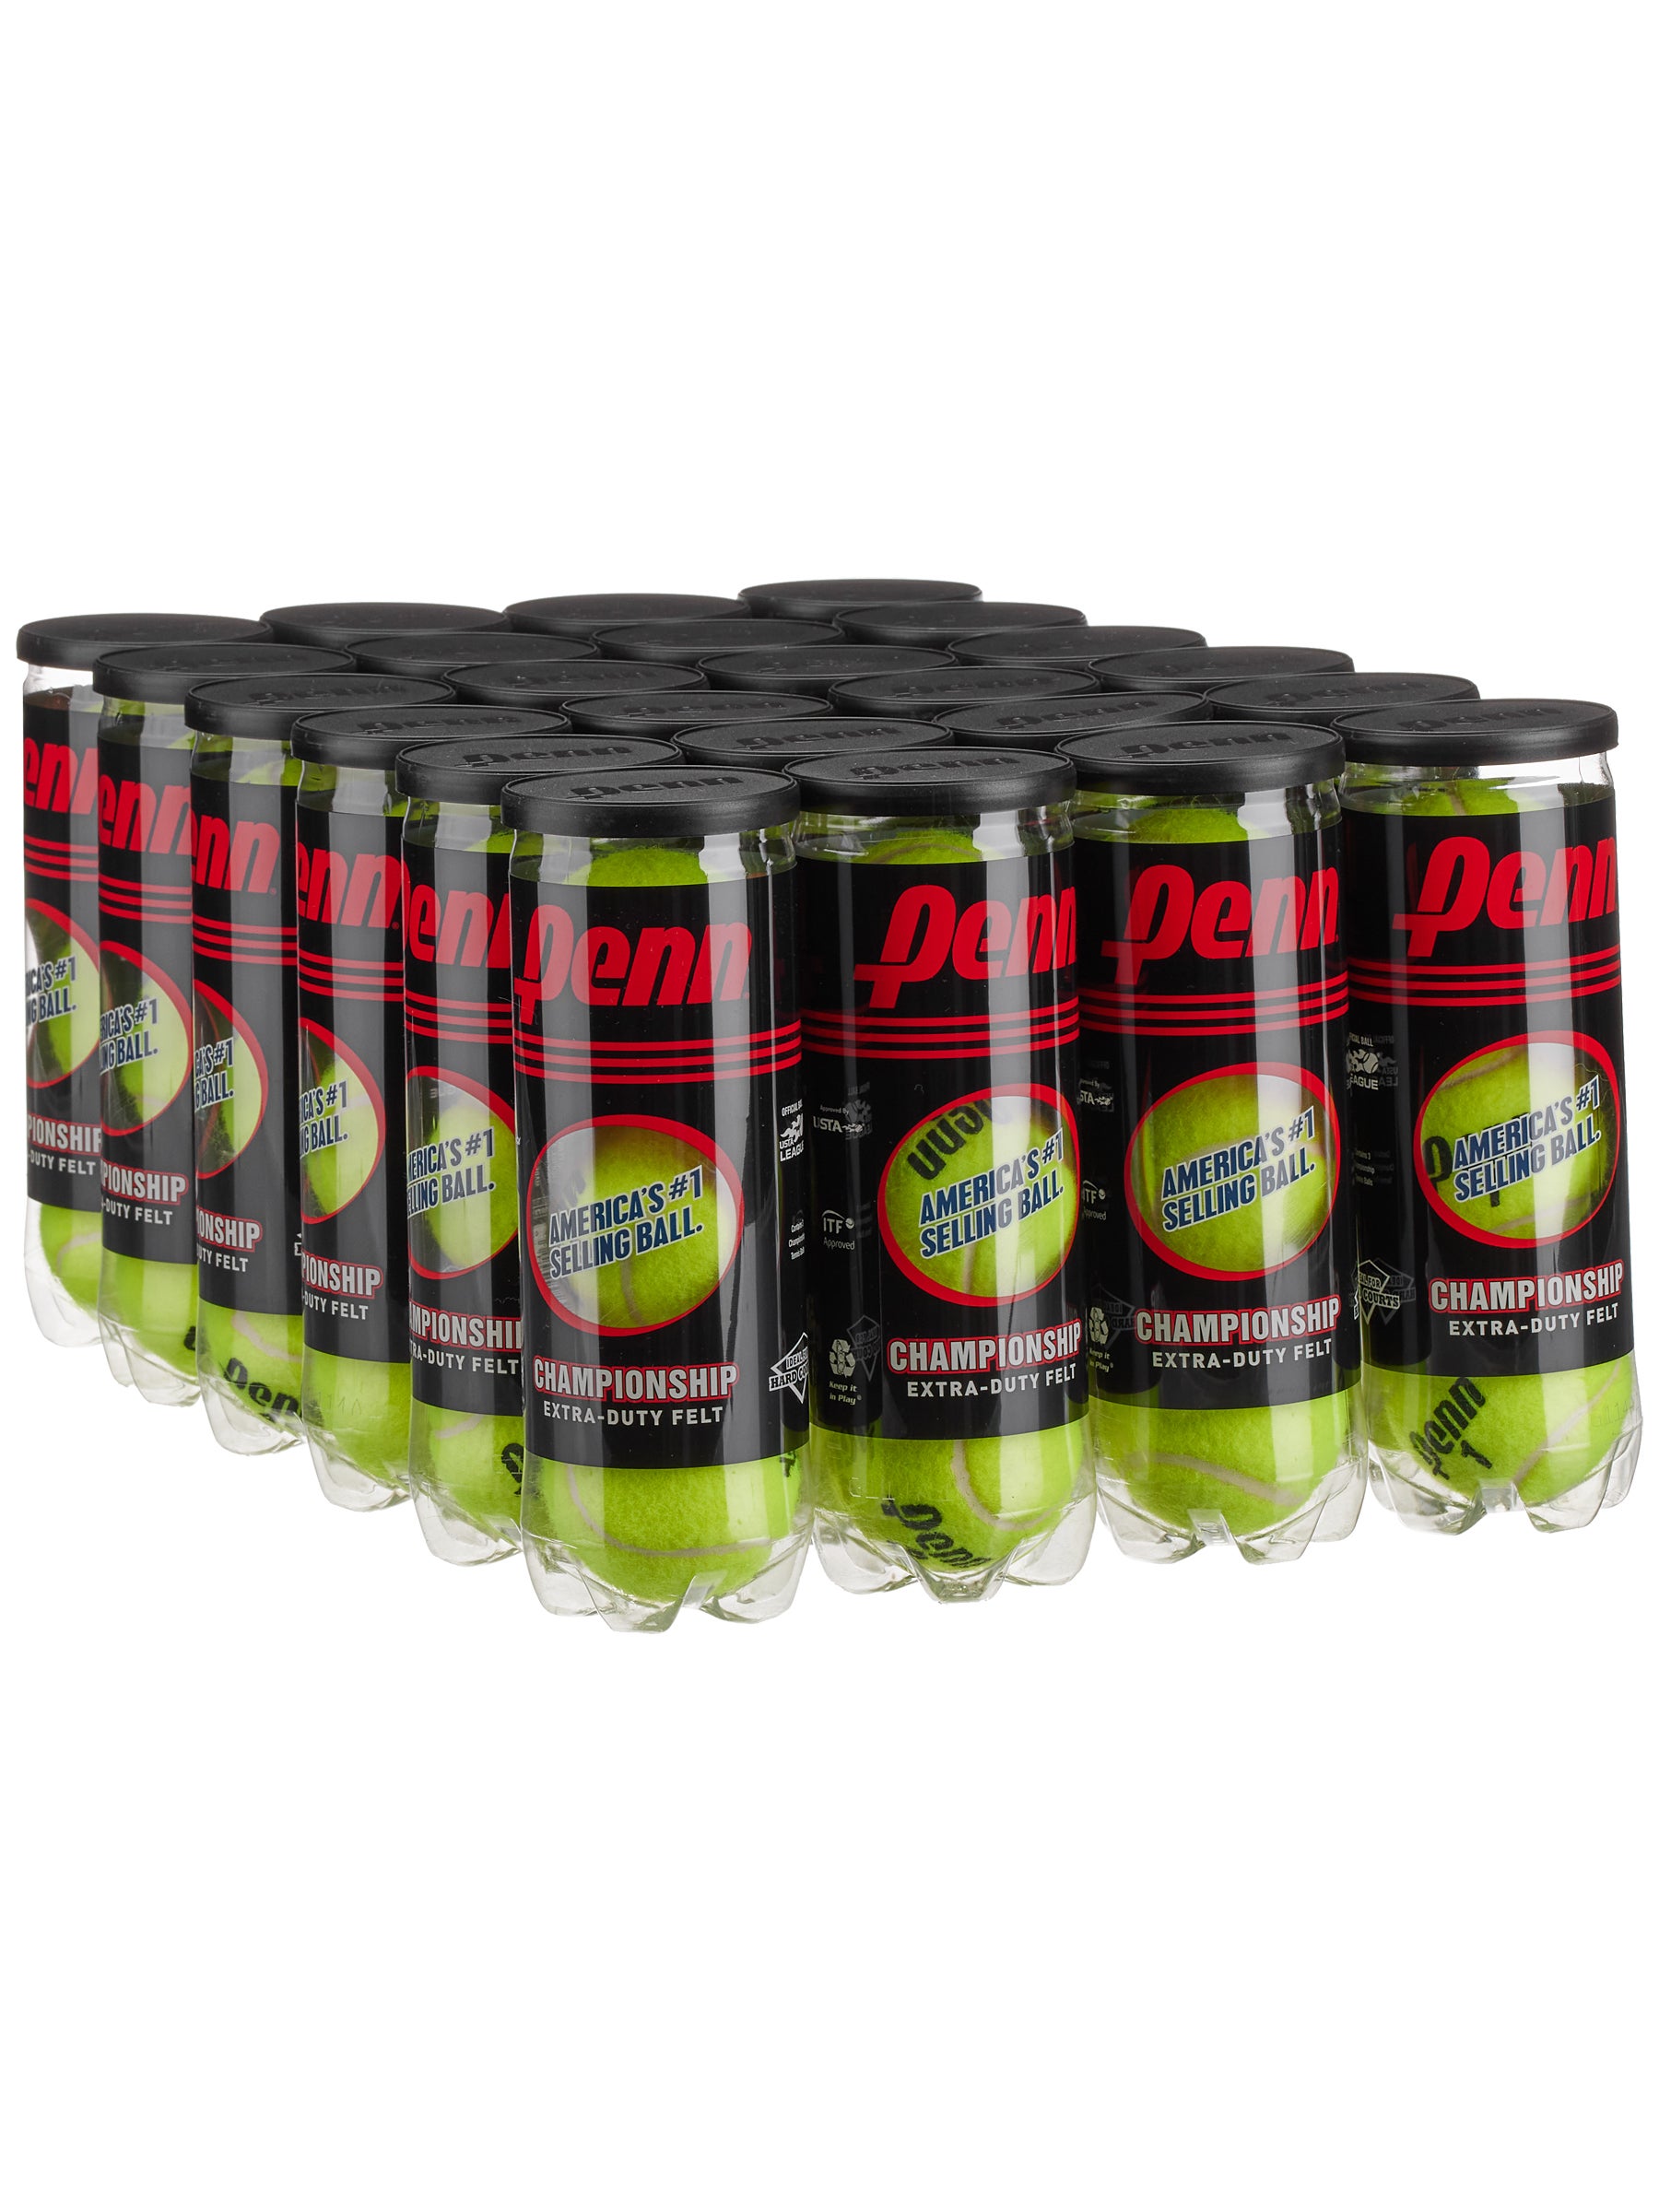 Penn Championship Tennis Balls Extra Duty Felt Pressurized Tennis Balls 24 Cans 